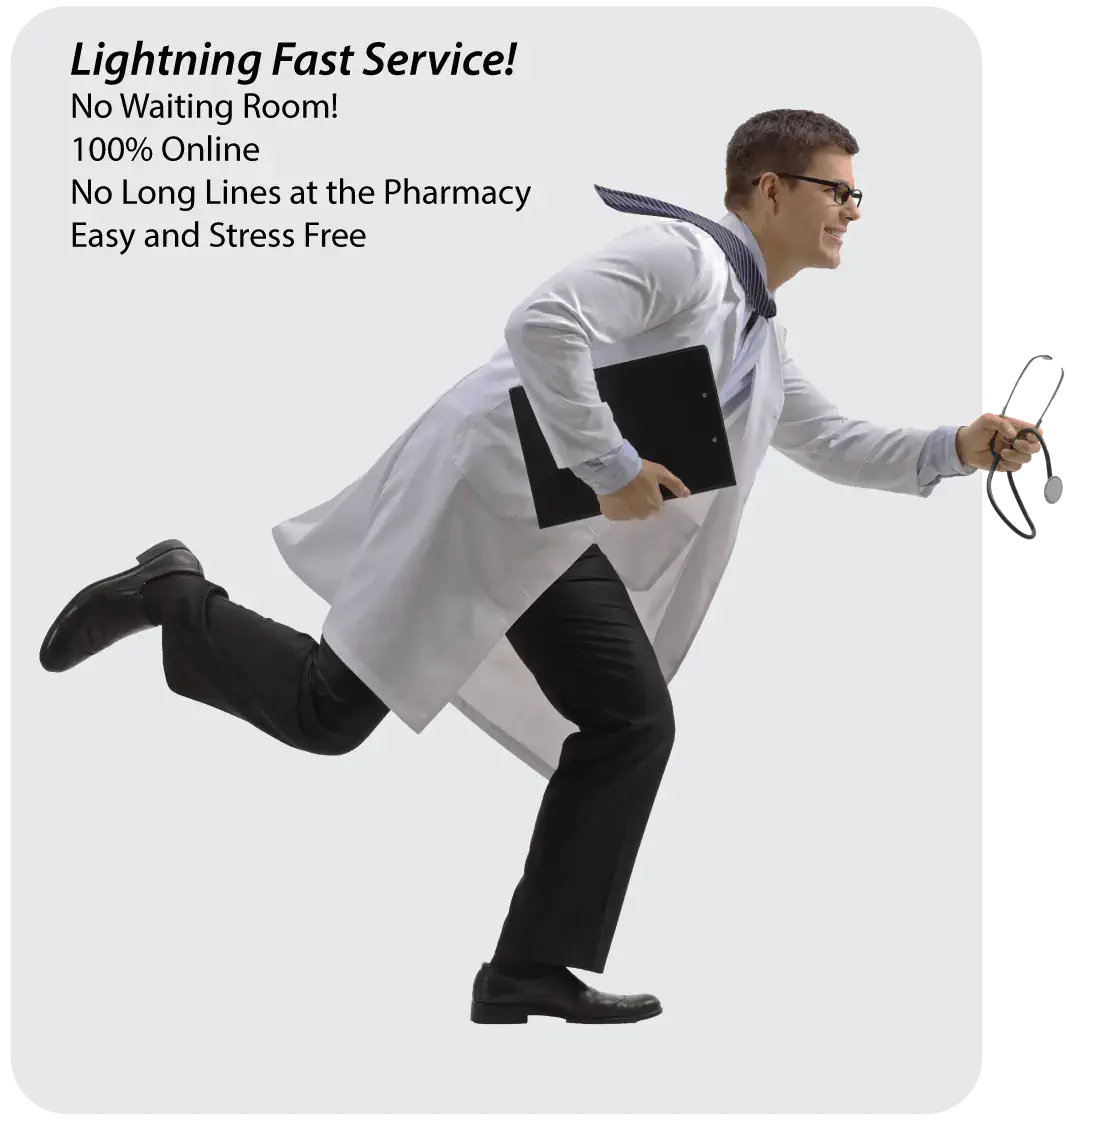 Lightning Fast Service!